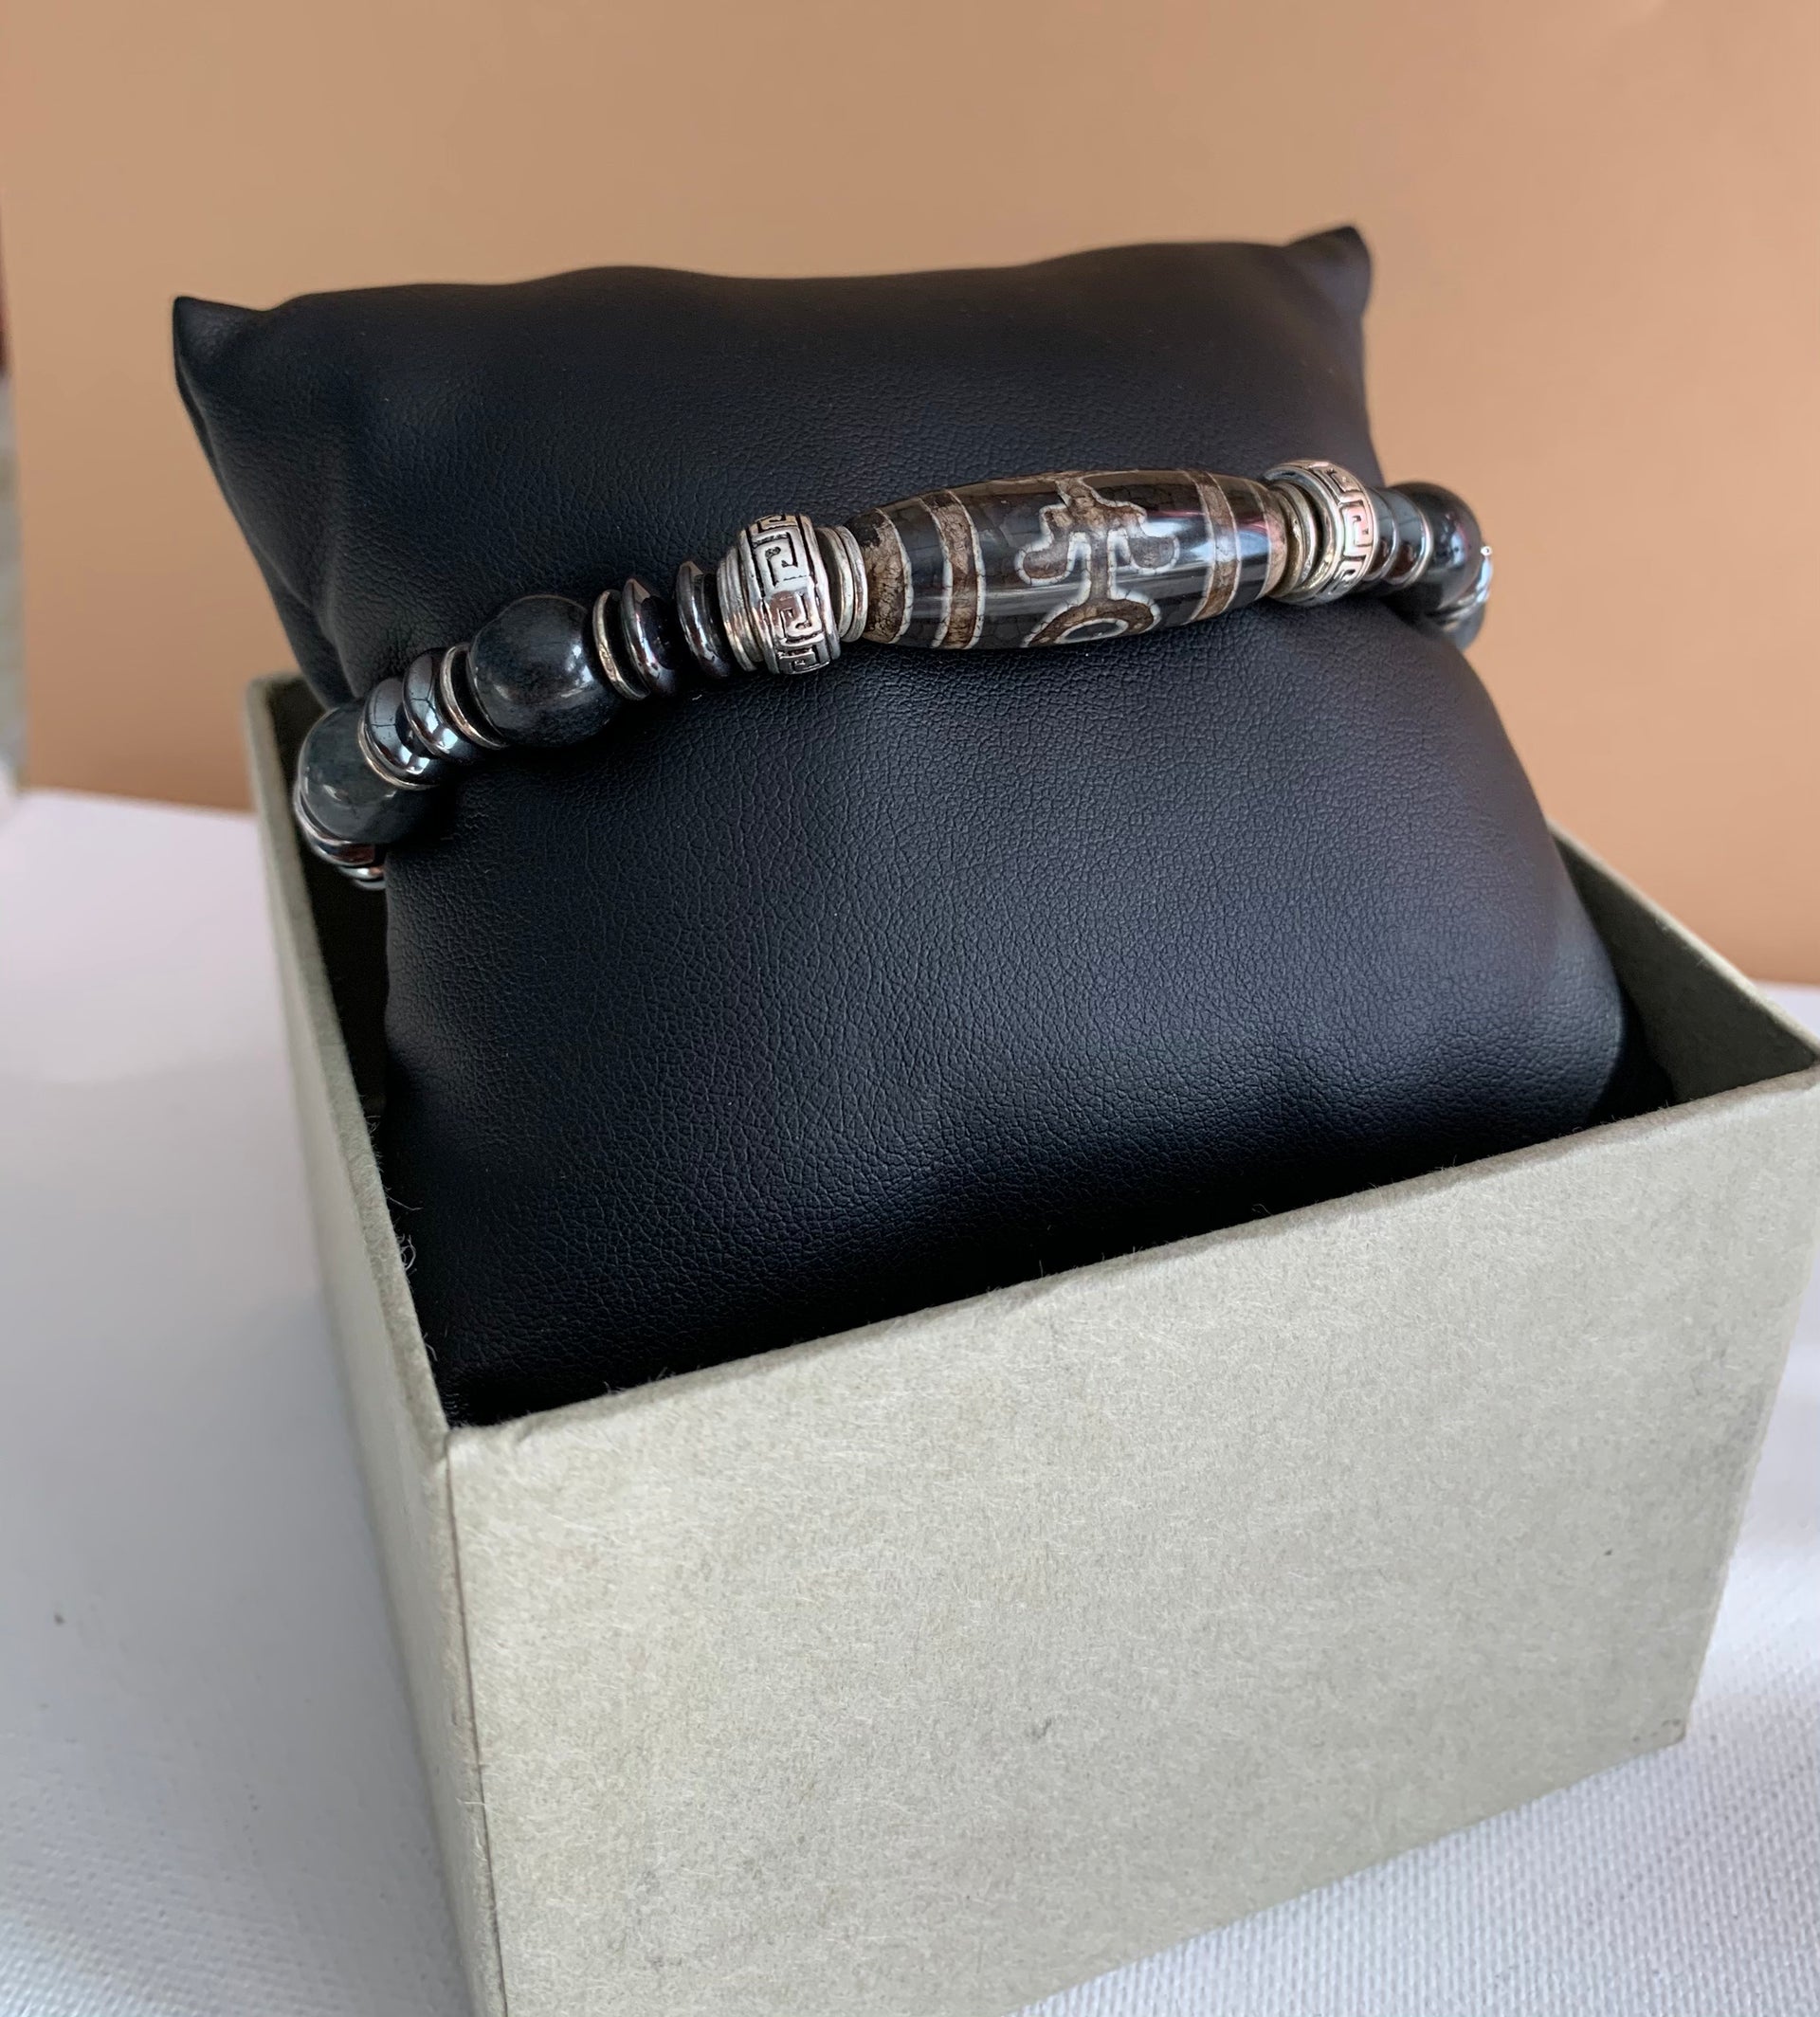 Men’s Jade and Tibetan Stone Bracelet